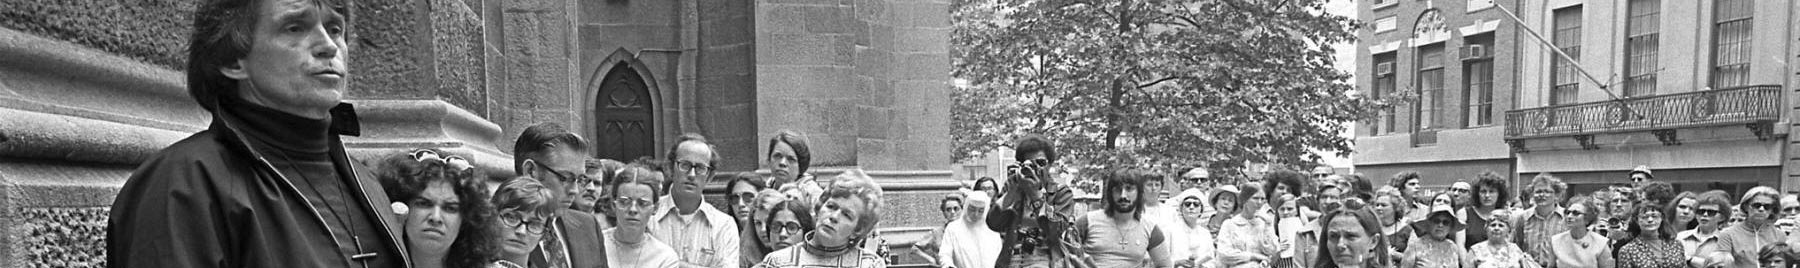 The nonviolent activist and priest Daniel Berrigan at Cornell University, 1970